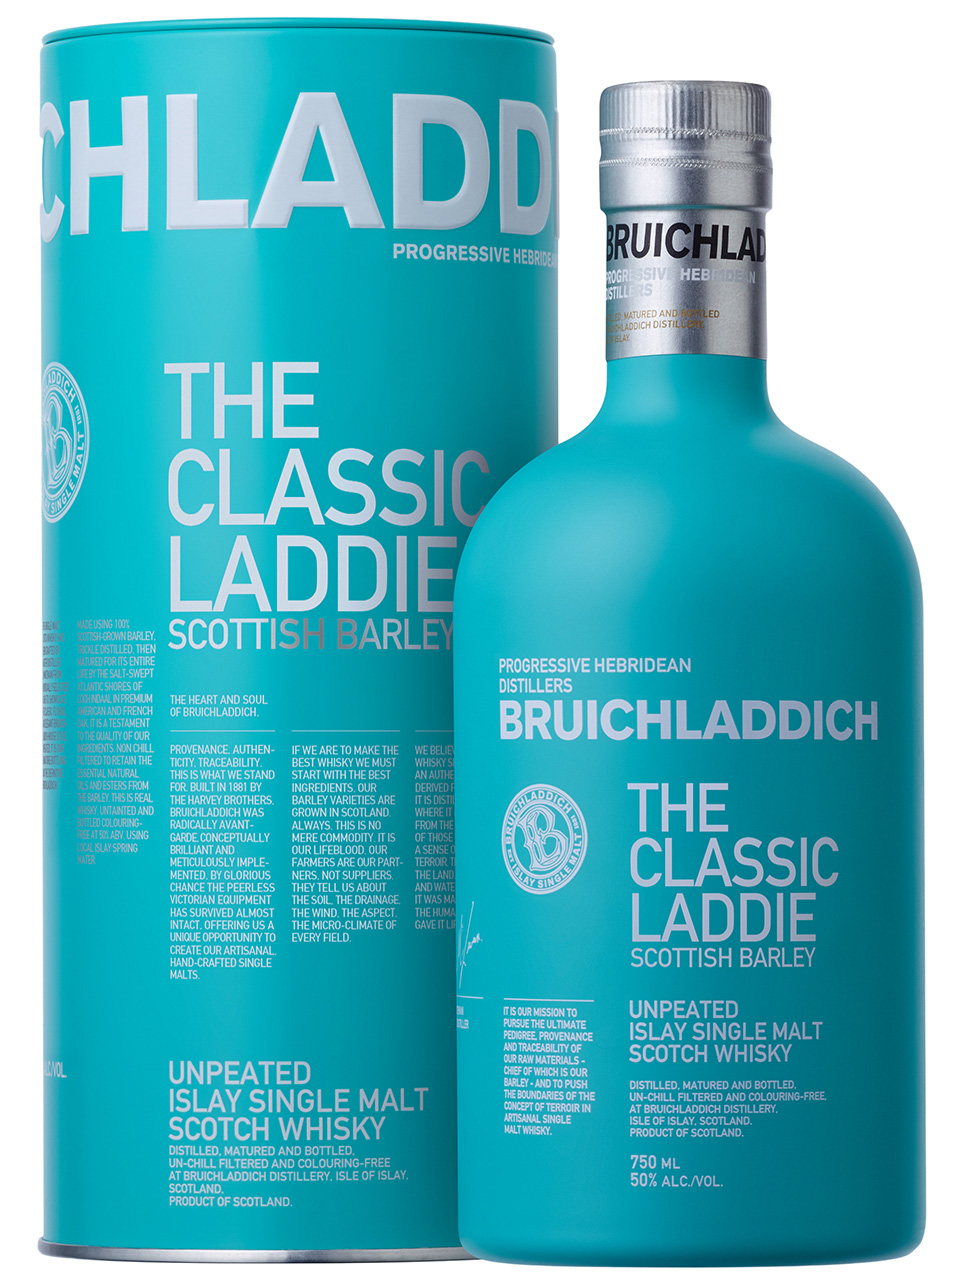 Bruichladdich The Classic Laddie SingleMalt Scotch